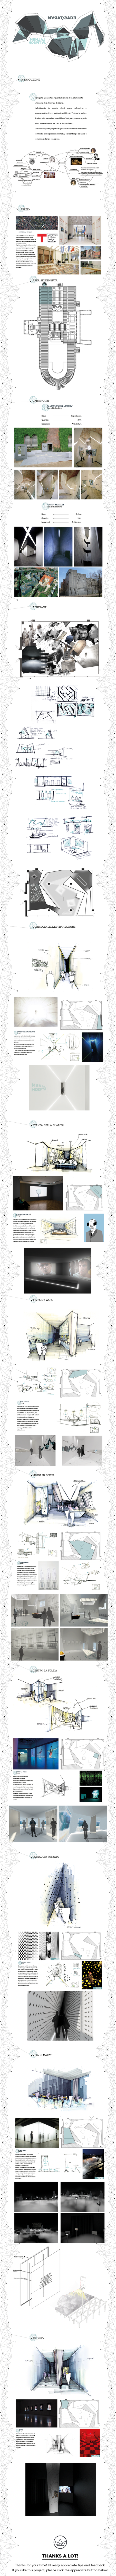 Interior design Exhibition  Theatre Marat sade timeline milan milano Triennale